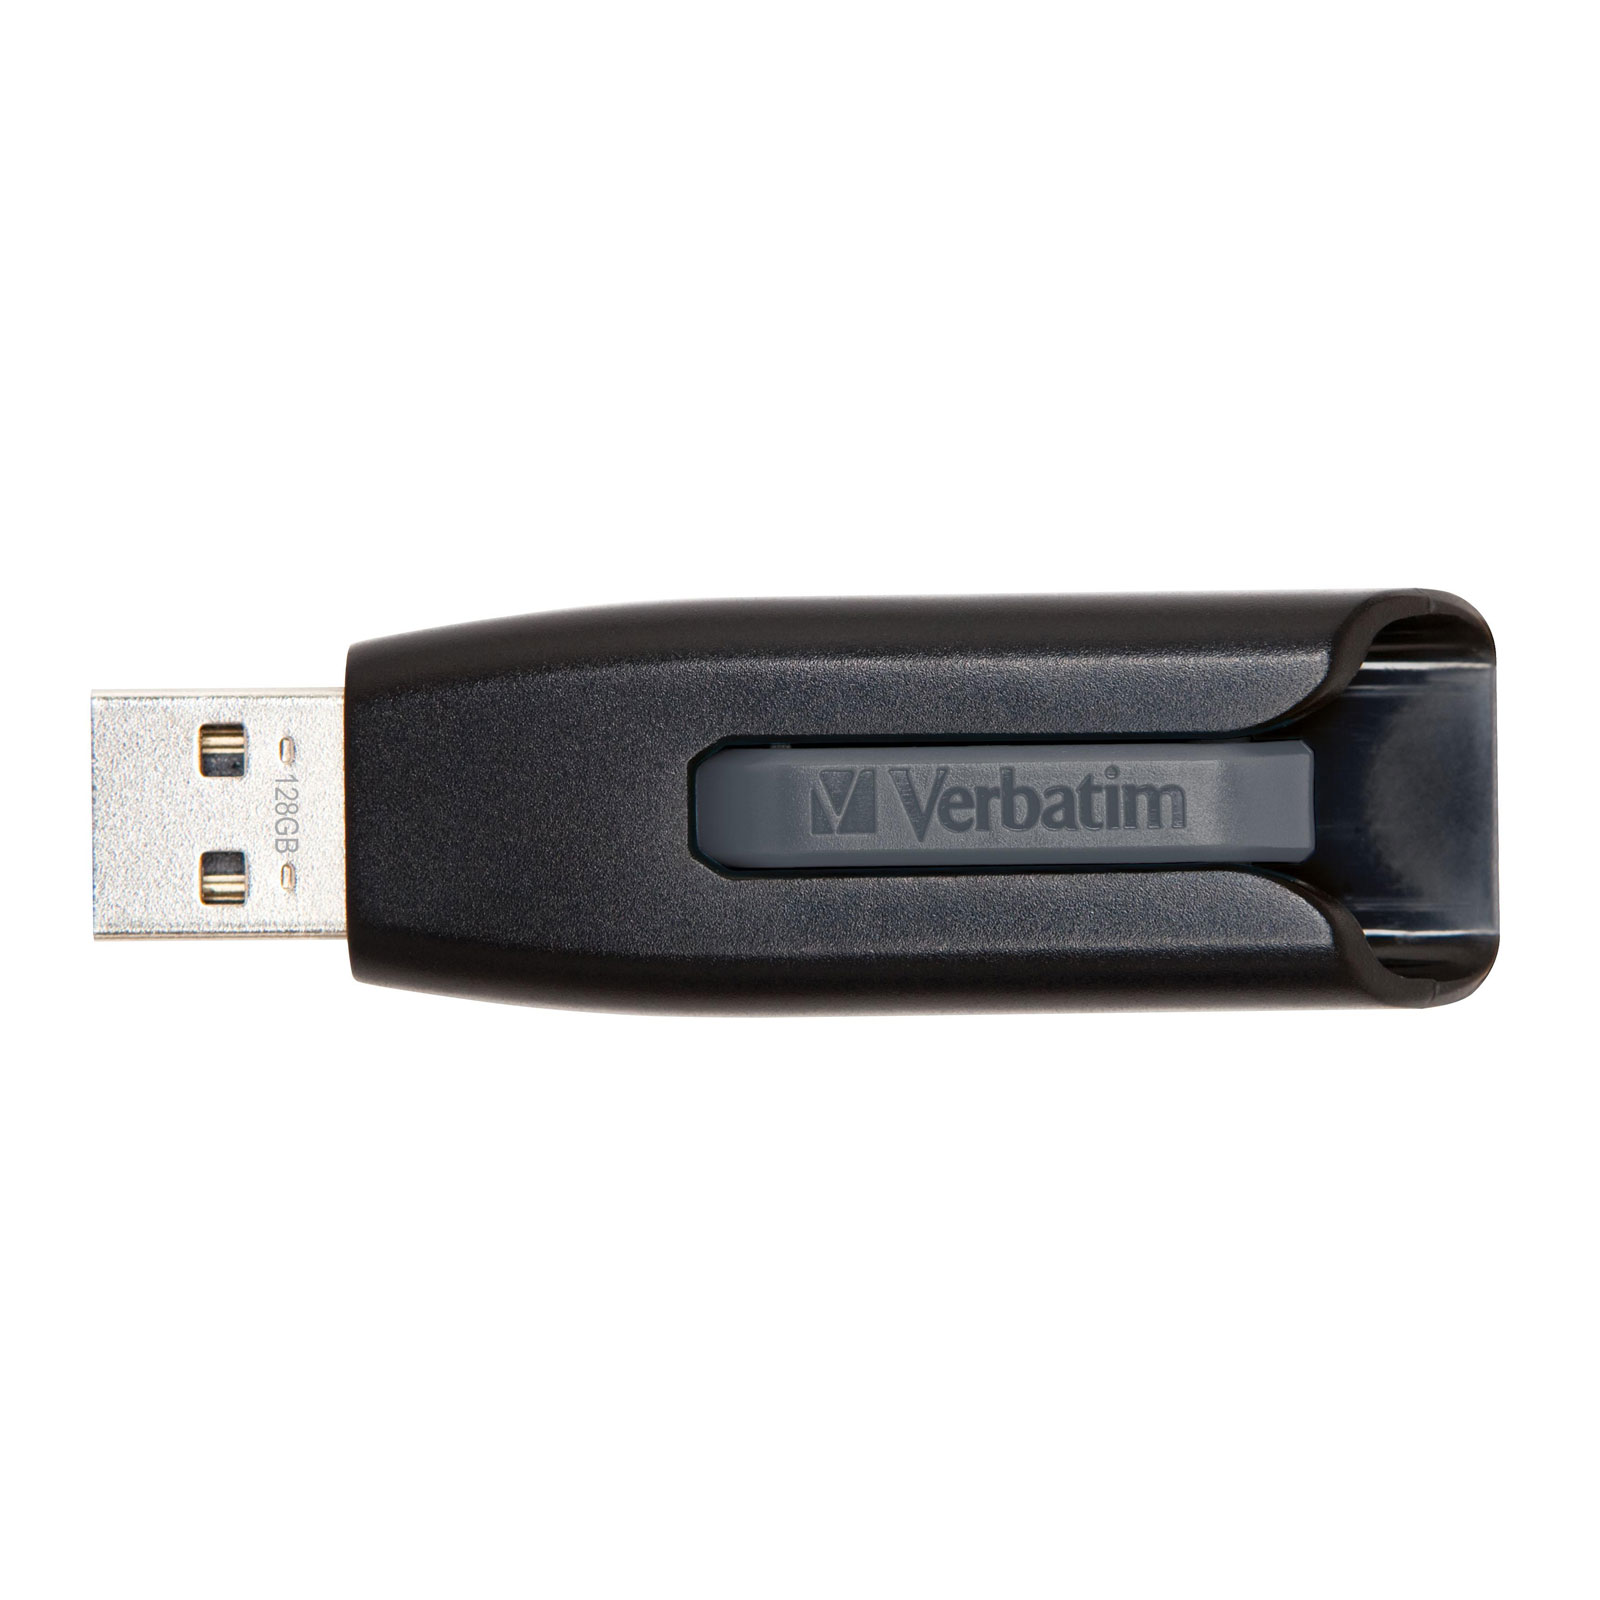 VERBATIM V3 USB 3.0 128 GB schwarz USB-Stick